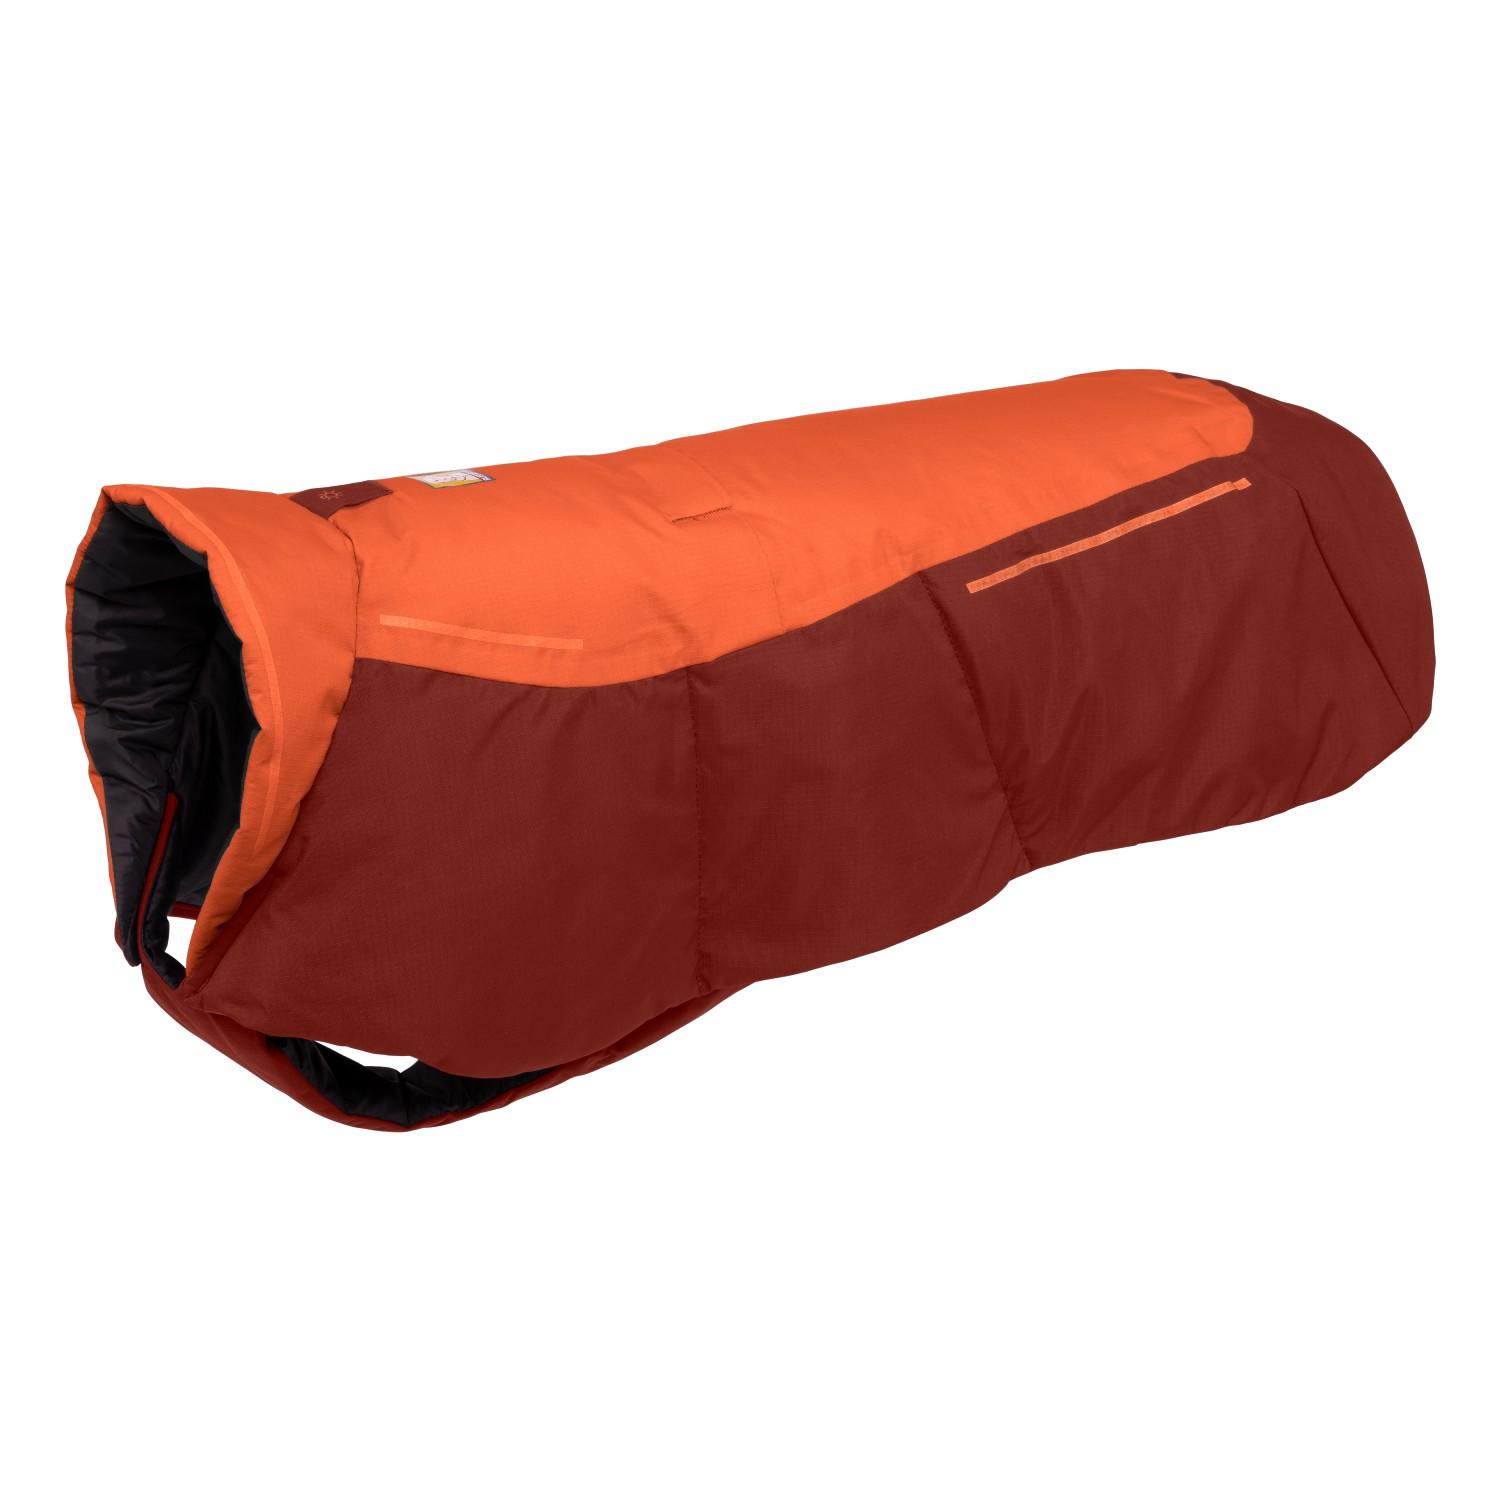 Vert Dog Jacket by RuffWear - Canyonlands Orange